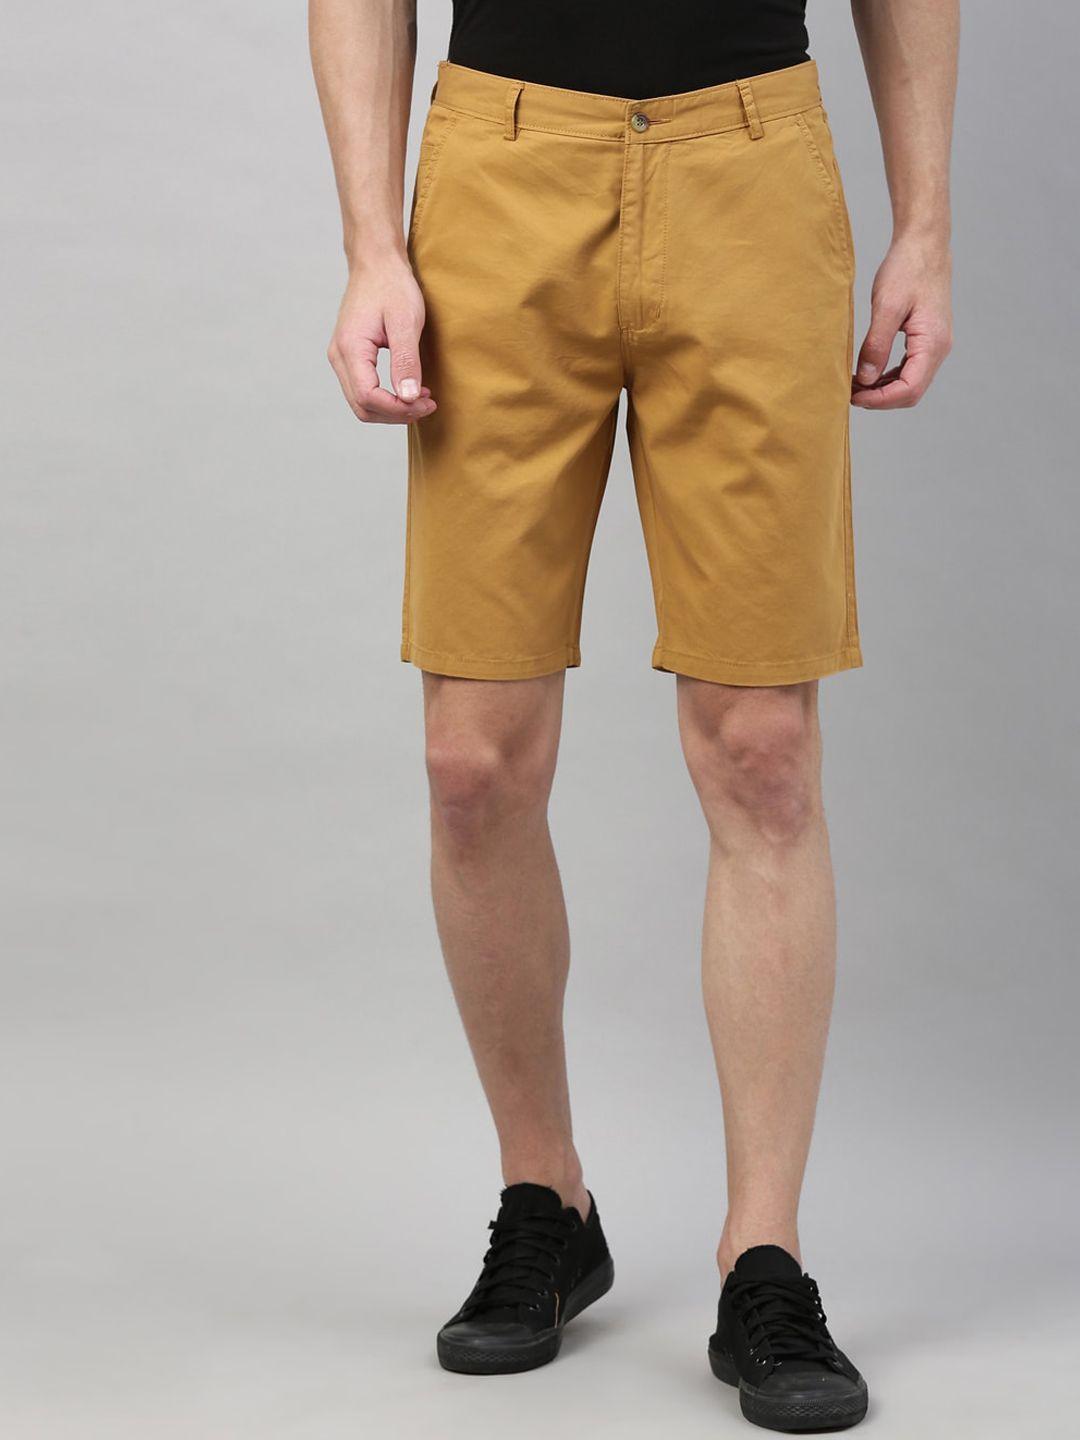 bushirt men brown solid regular fit chino shorts